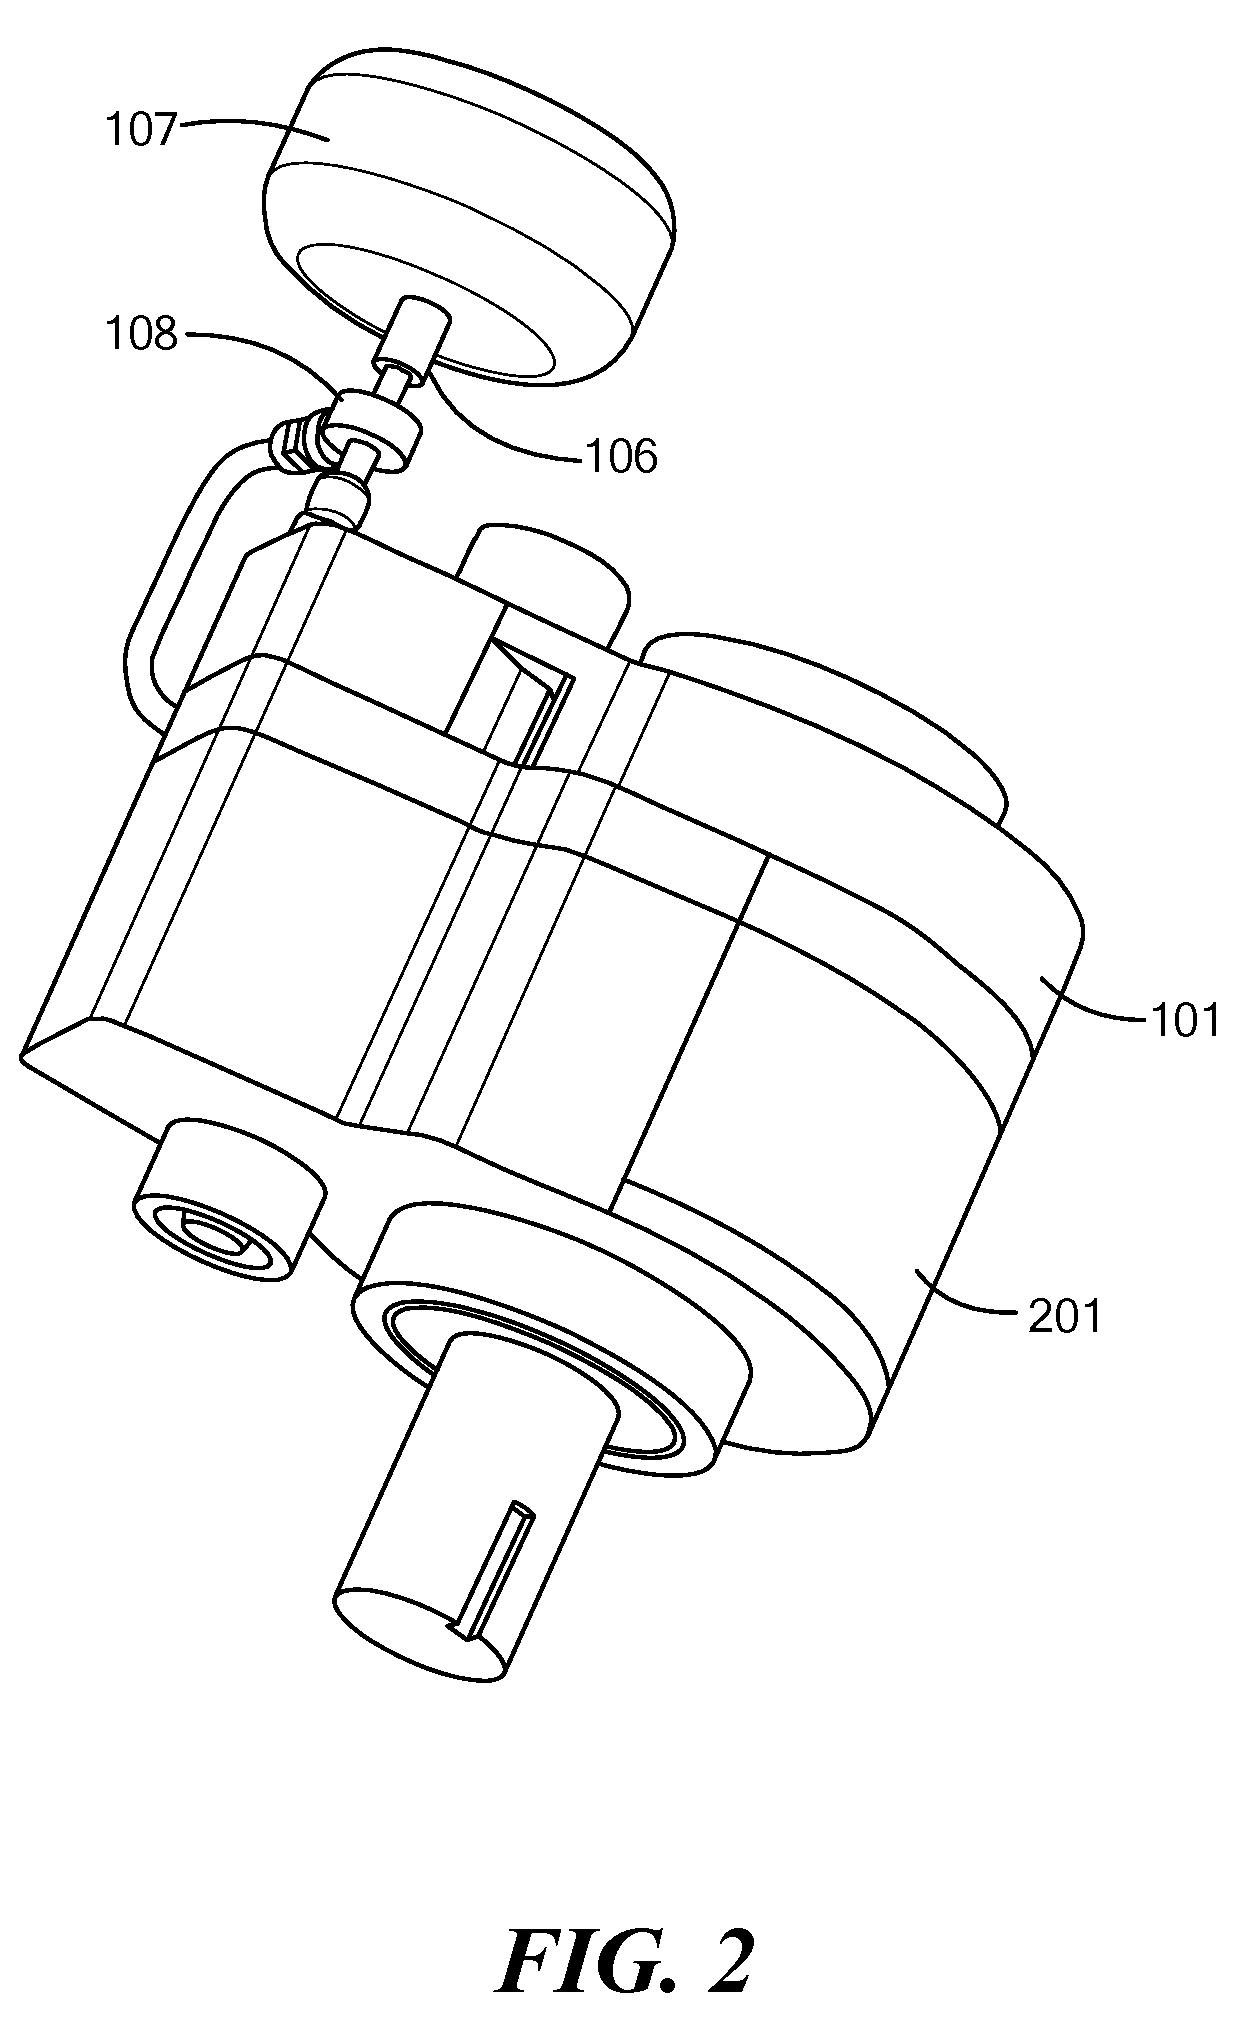 Hybrid cycle rotary engine